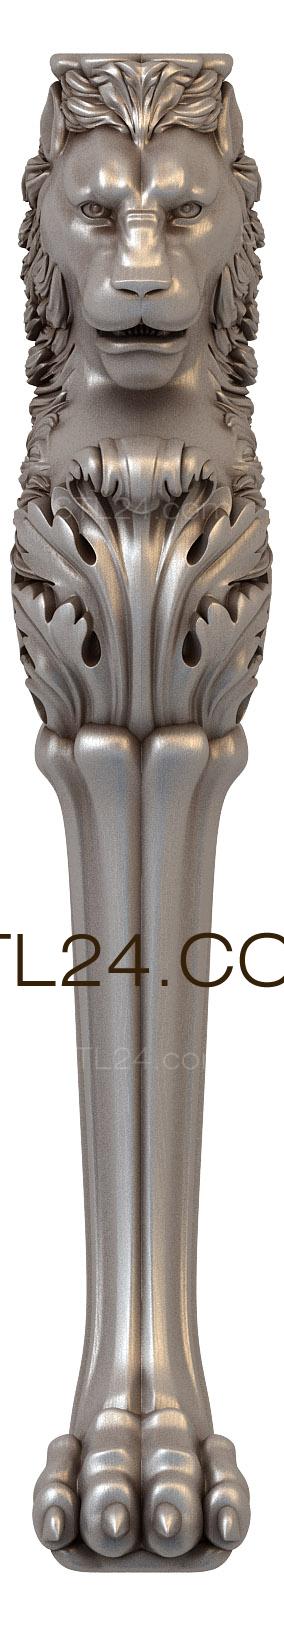 Legs (NJ_0747) 3D models for cnc